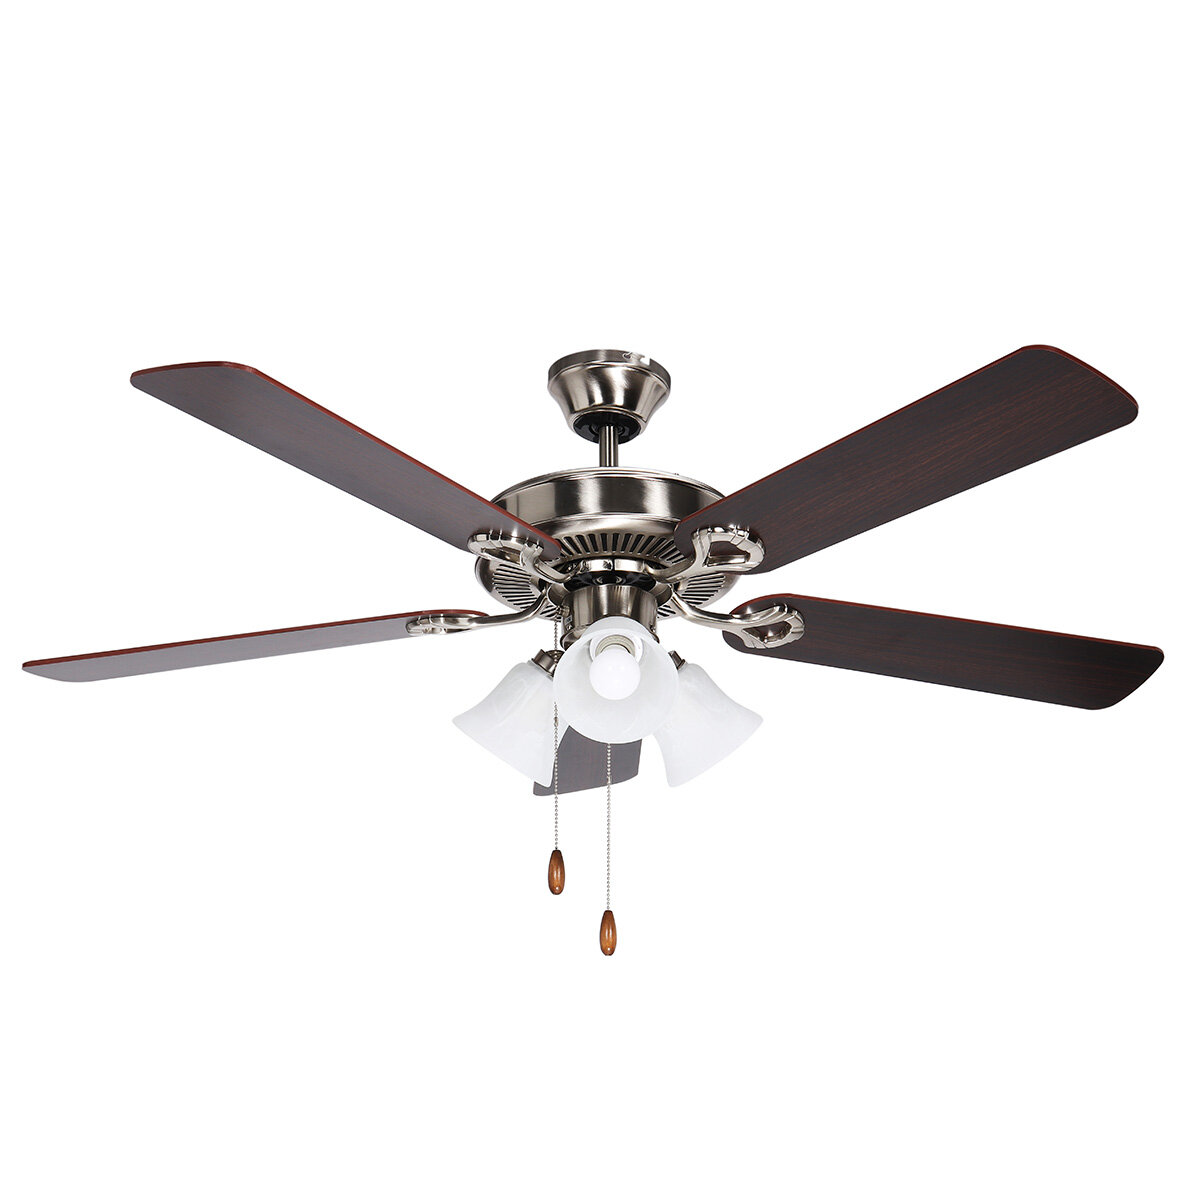 Image of 52'' Indoor Ceiling Fan Light 5-Blades Reversible Blades Motor for Dining Living Room Bedroom